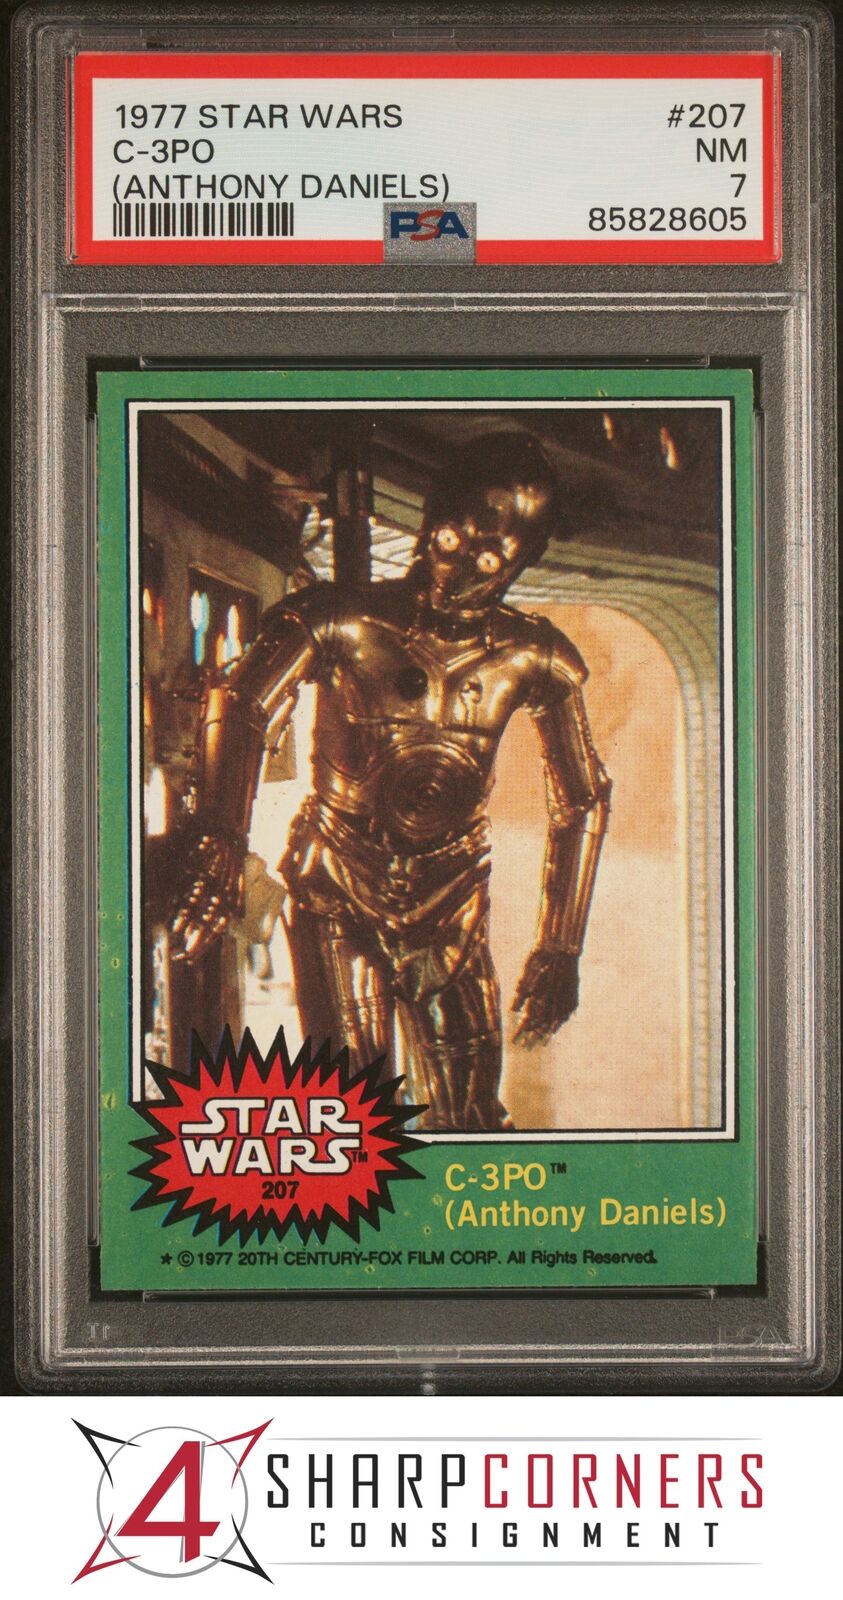 1977 STAR WARS #207 C-3PO ANTHONY DANIELS PSA 7 N3910841-605